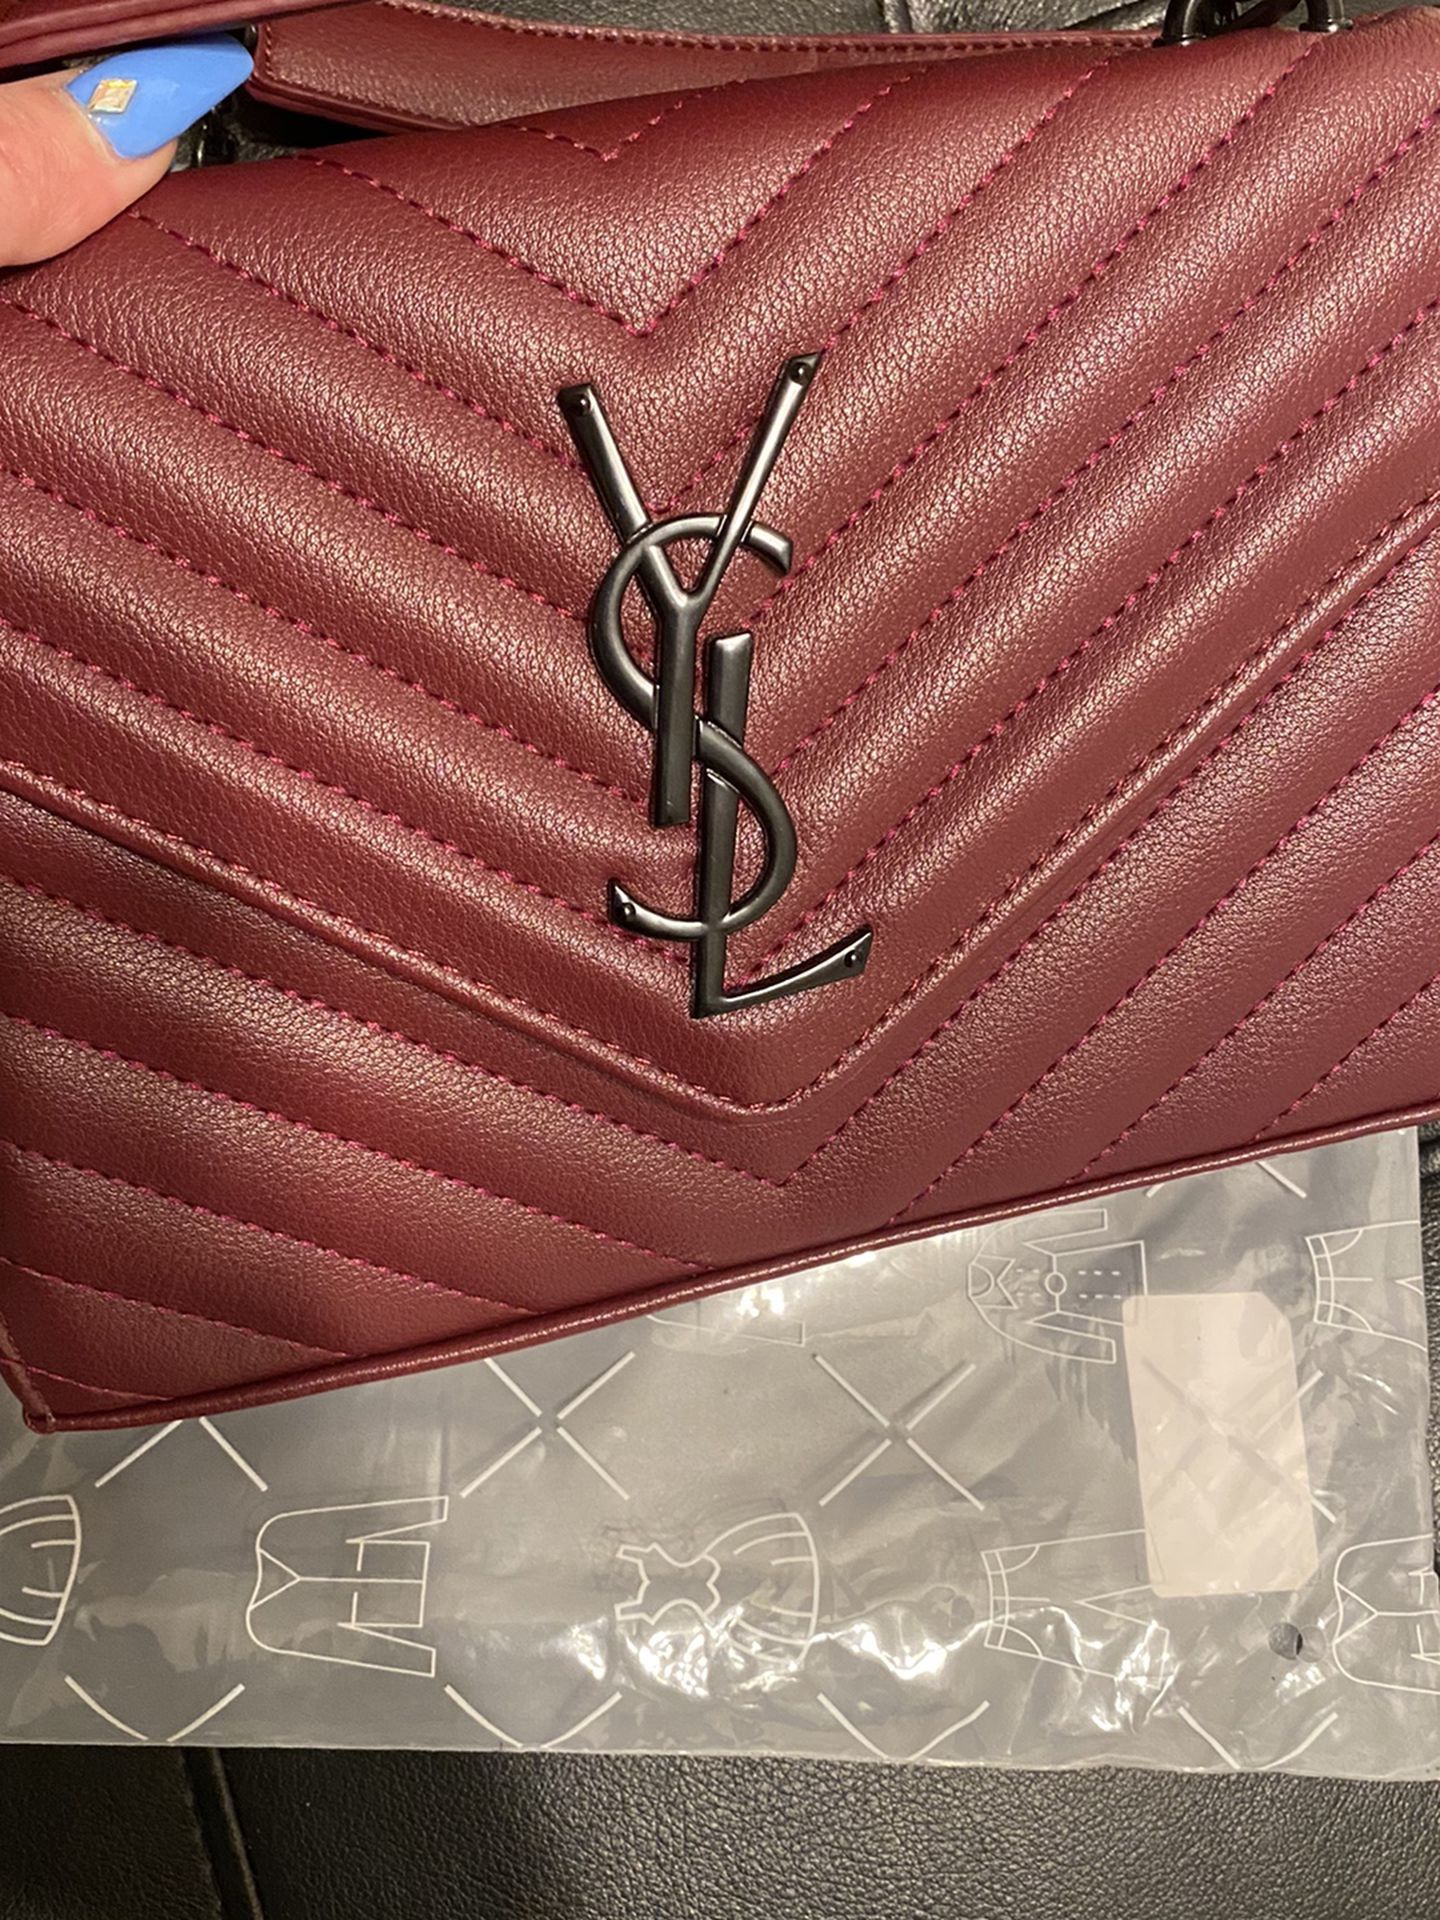 Burgendy Ysl Genuine Leather Chain Bag